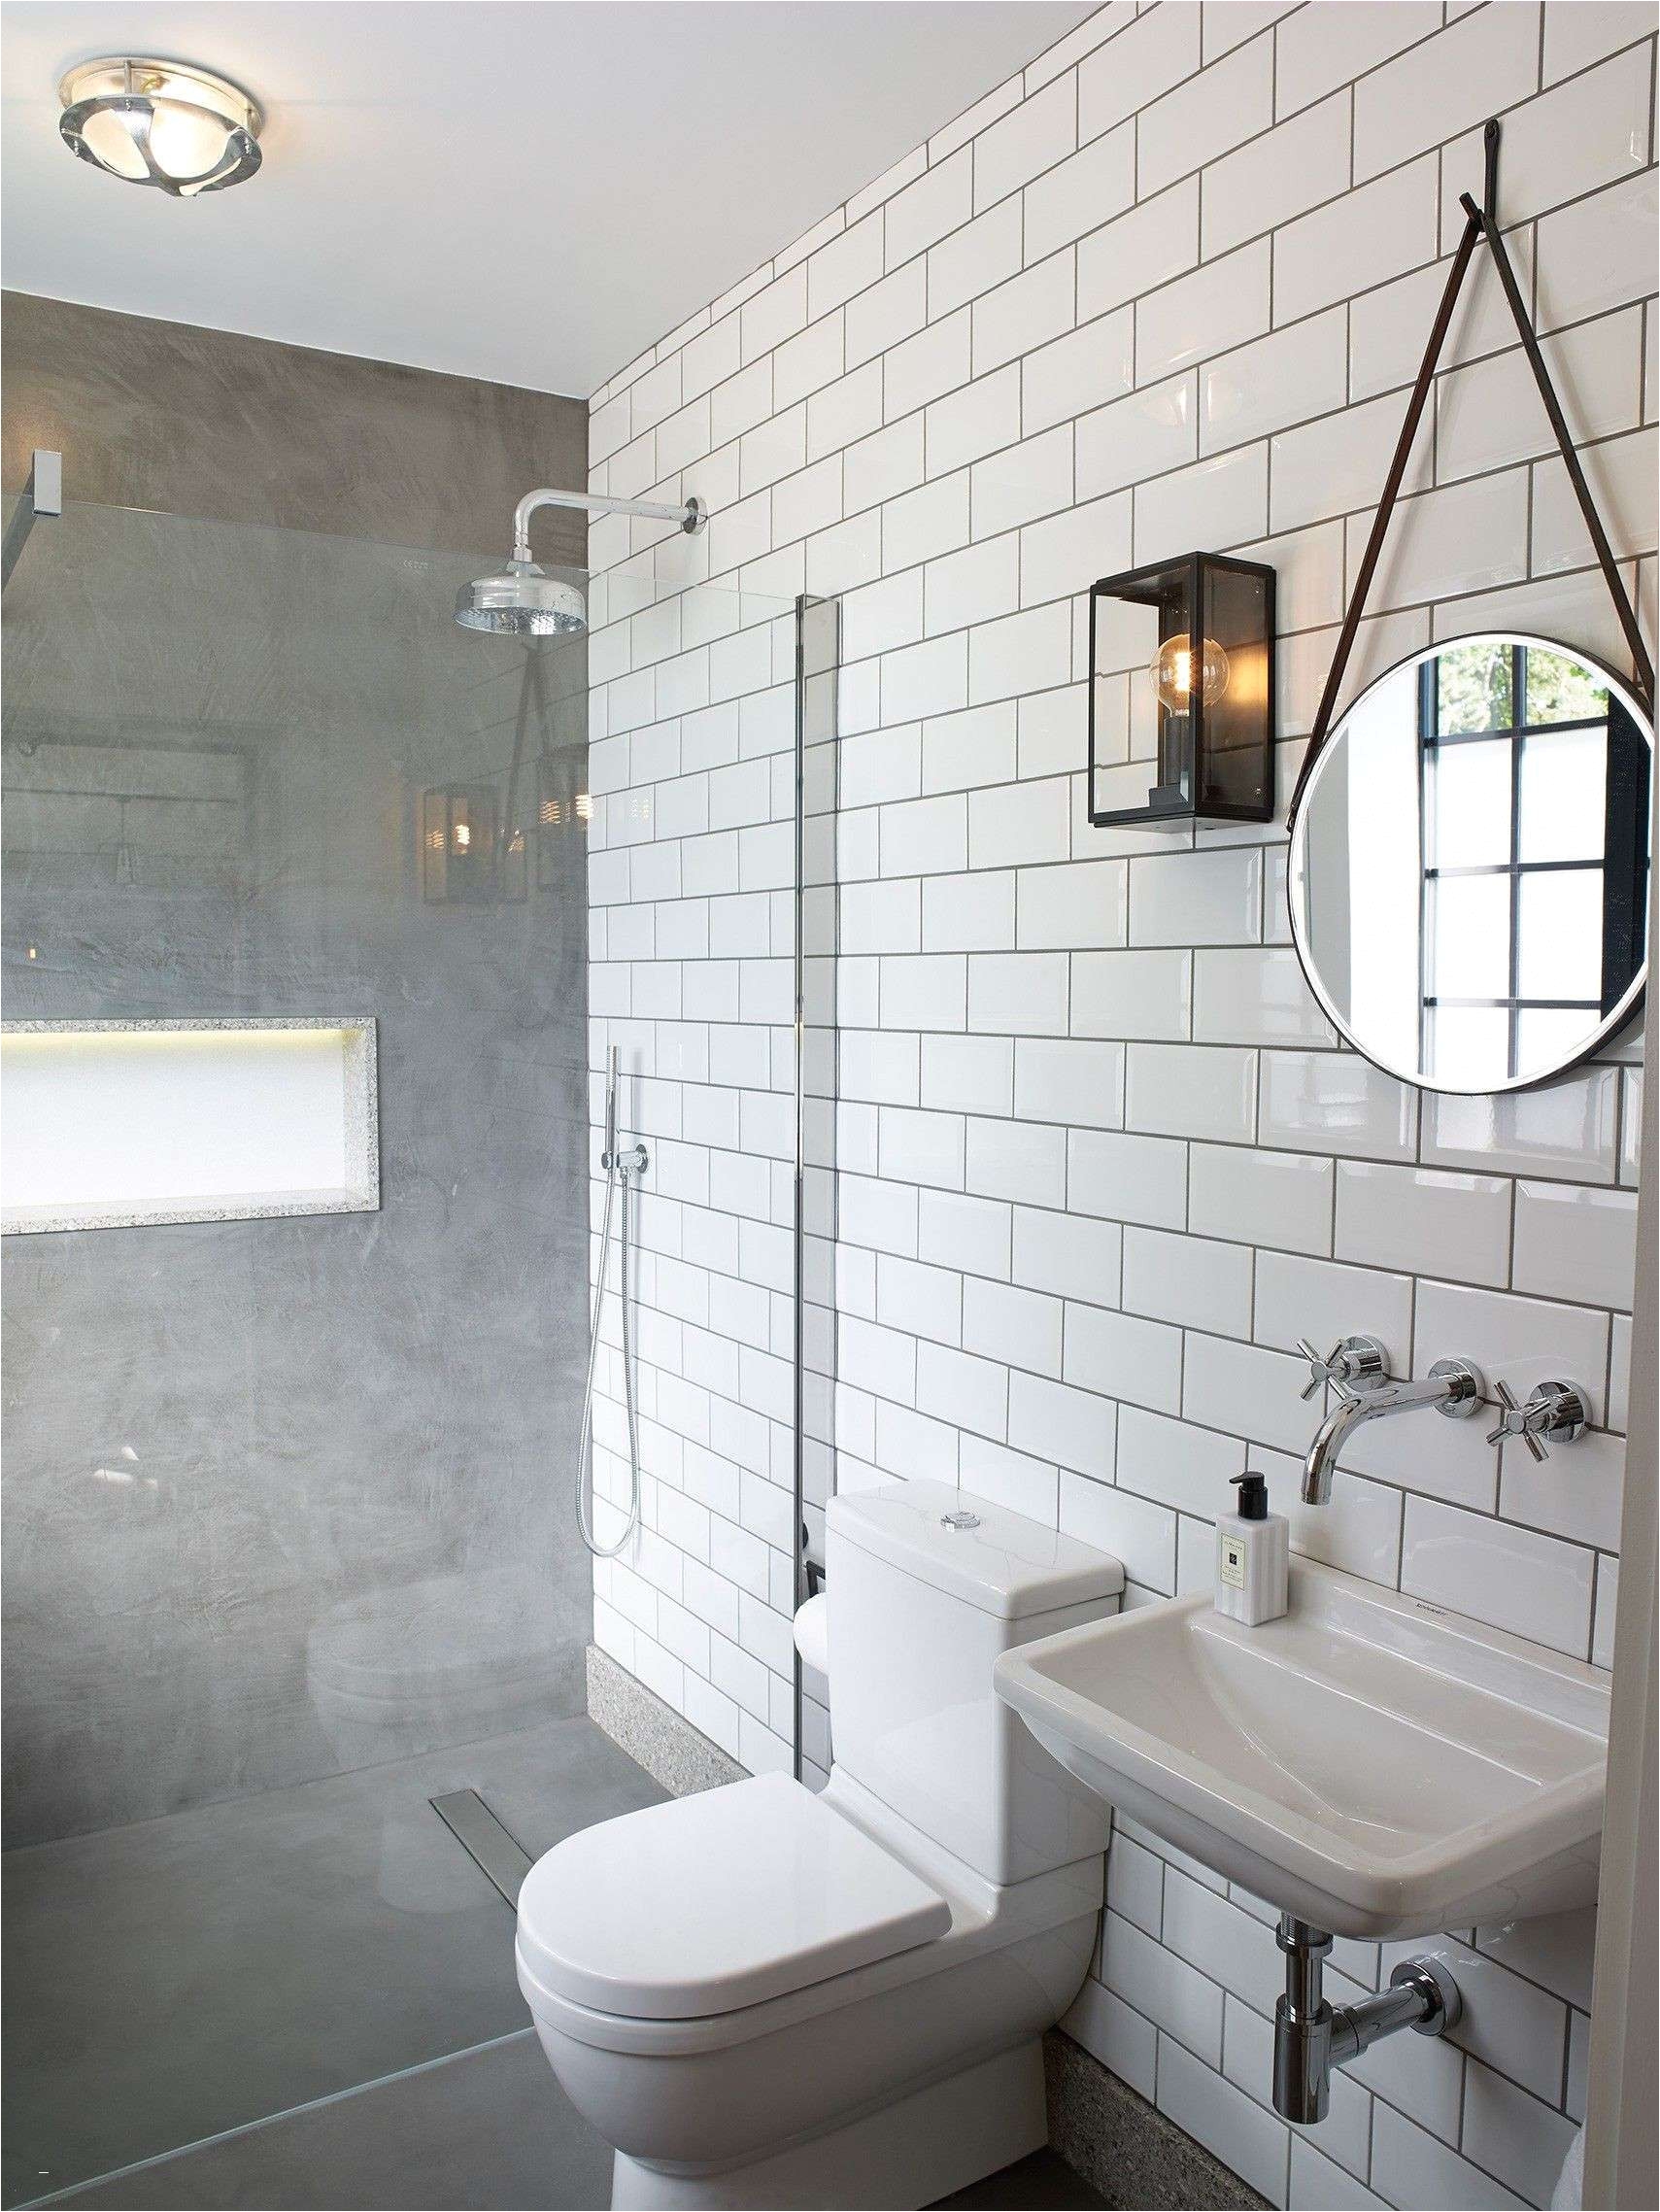 Fantastic Home Art Designs About Bathroom Wall Decor Ideas Incredible Tag Toilet Ideas 0d Mucsat 